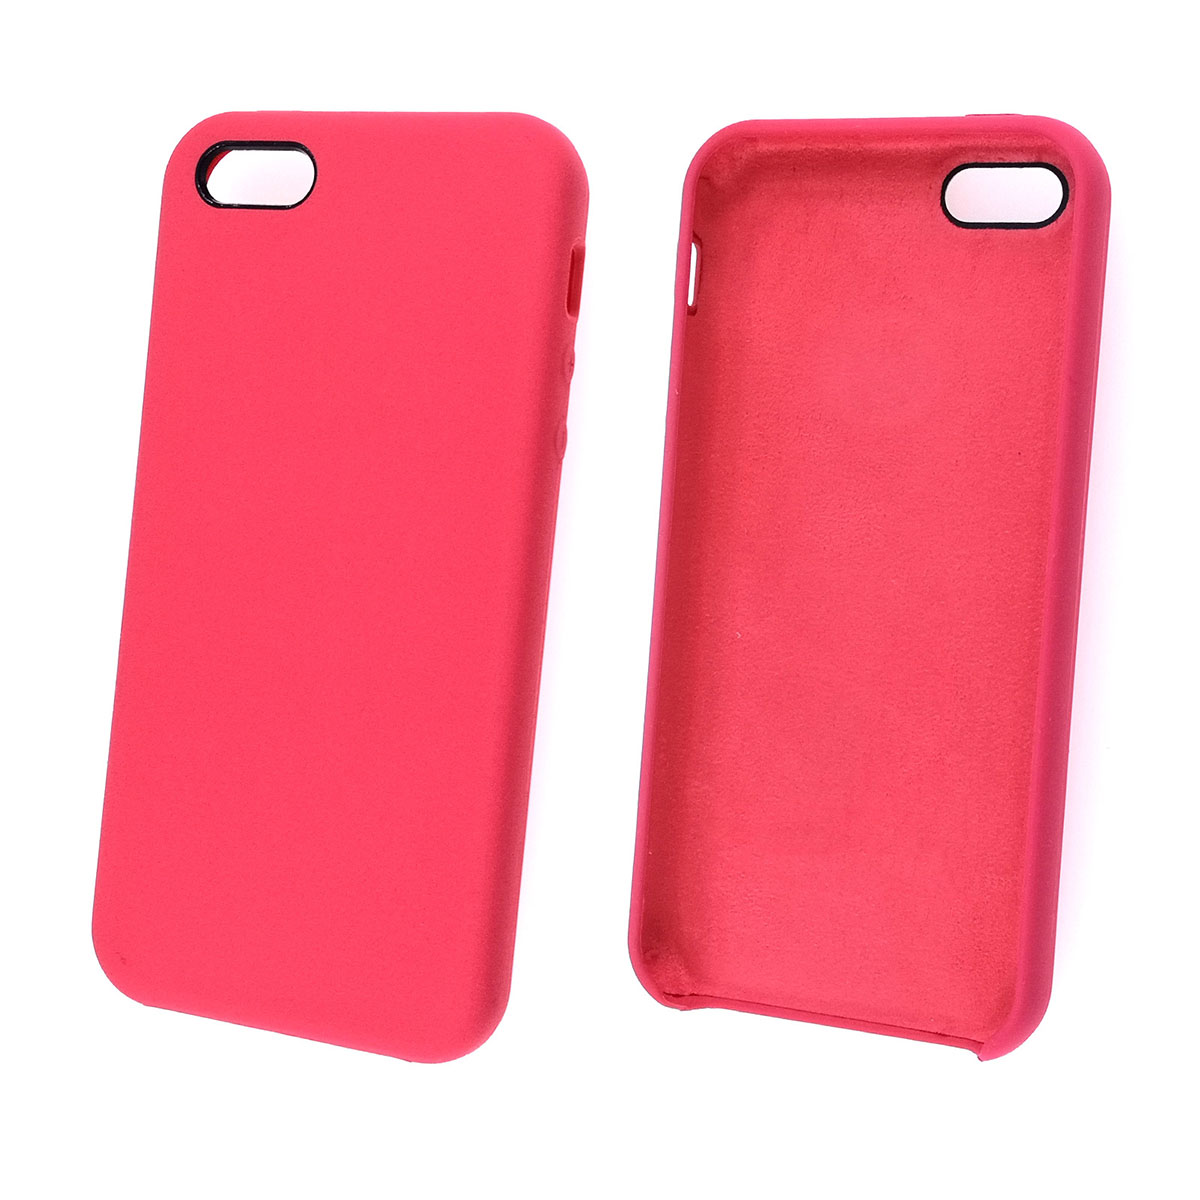 Чехол накладка Silicon Case для APPLE iPhone 5, 5S, SE, силикон, бархат, цвет красная малина.